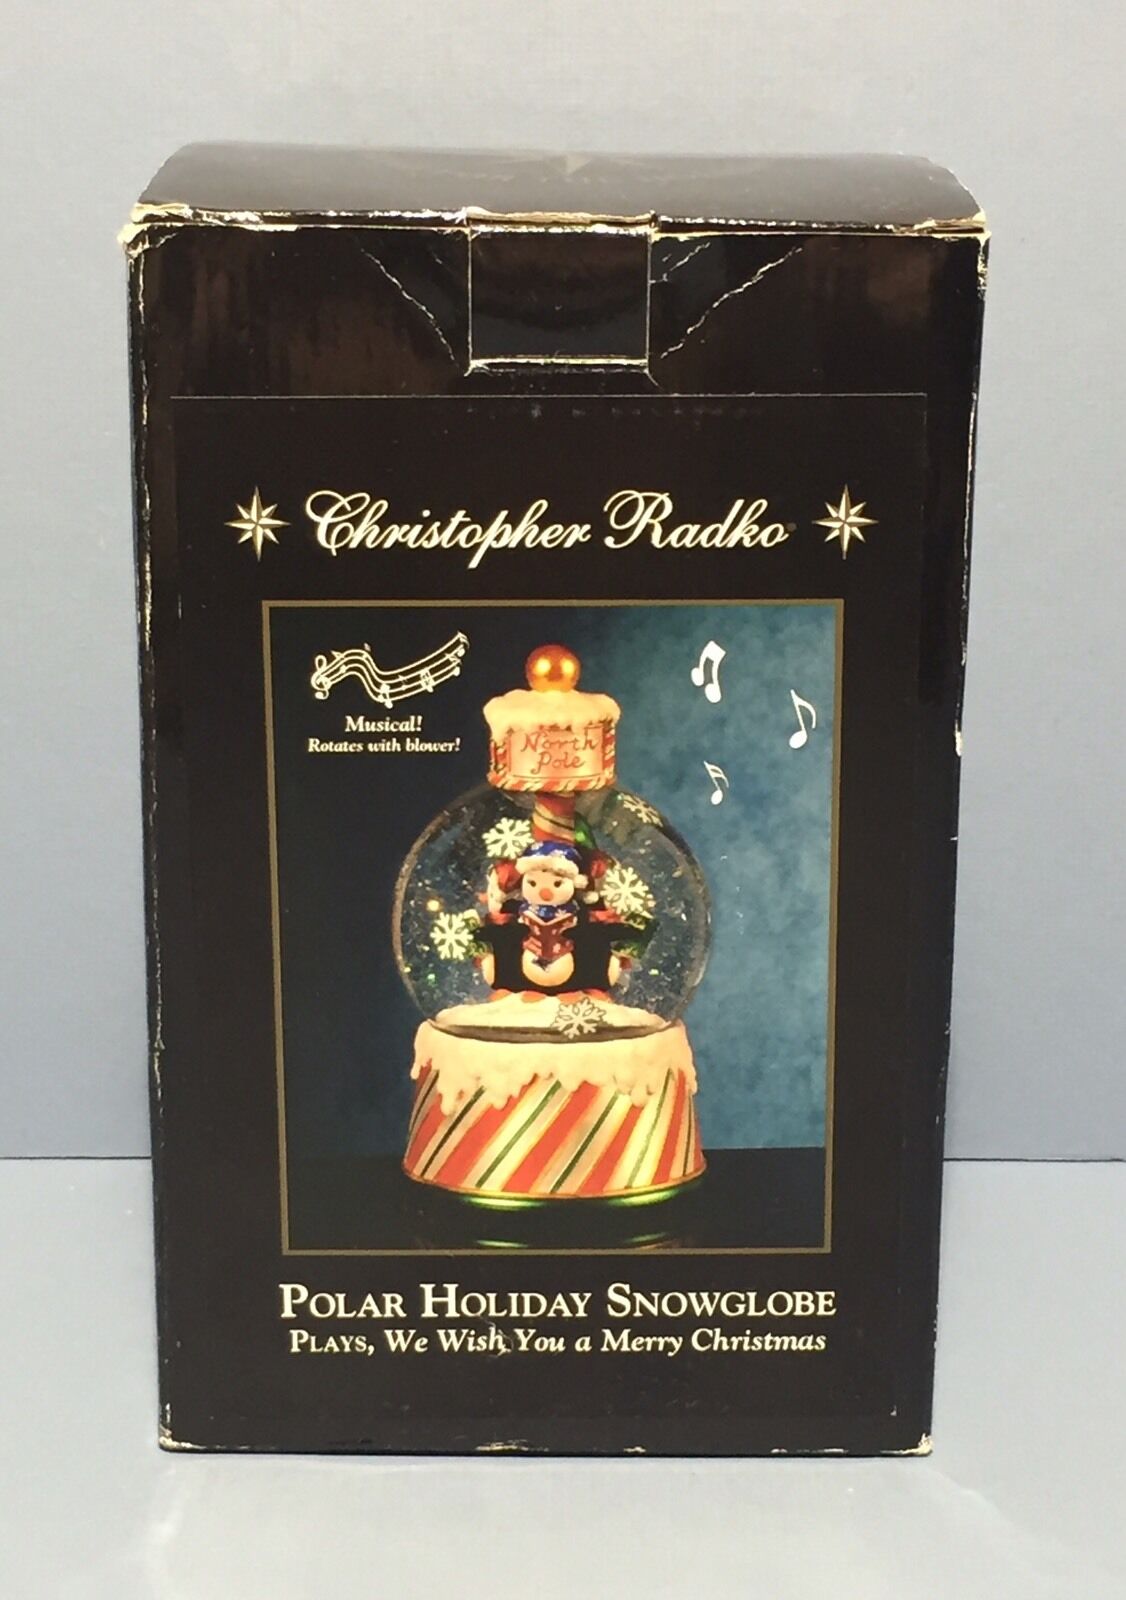 Christopher Radko Polar Holiday Snowglobe - Plays, We Wish You a Merry Christmas